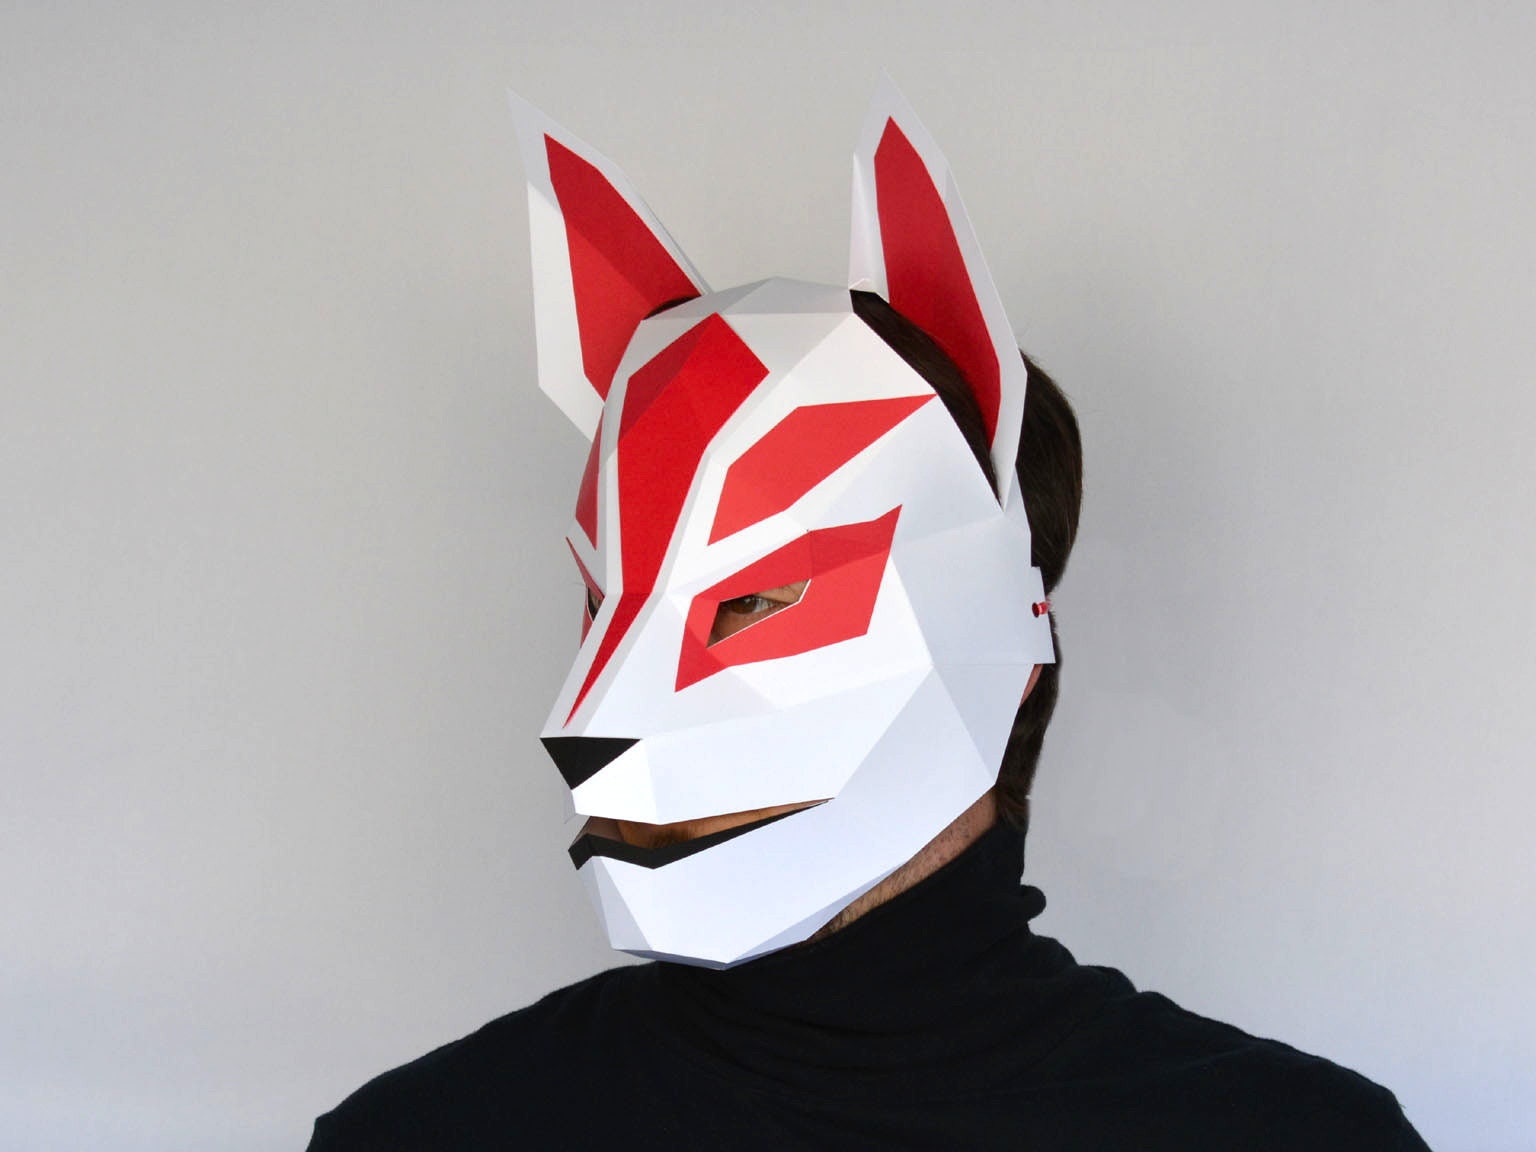 Paper Mask Craft - Fox Mask DIY Kirigami – Bowerbird